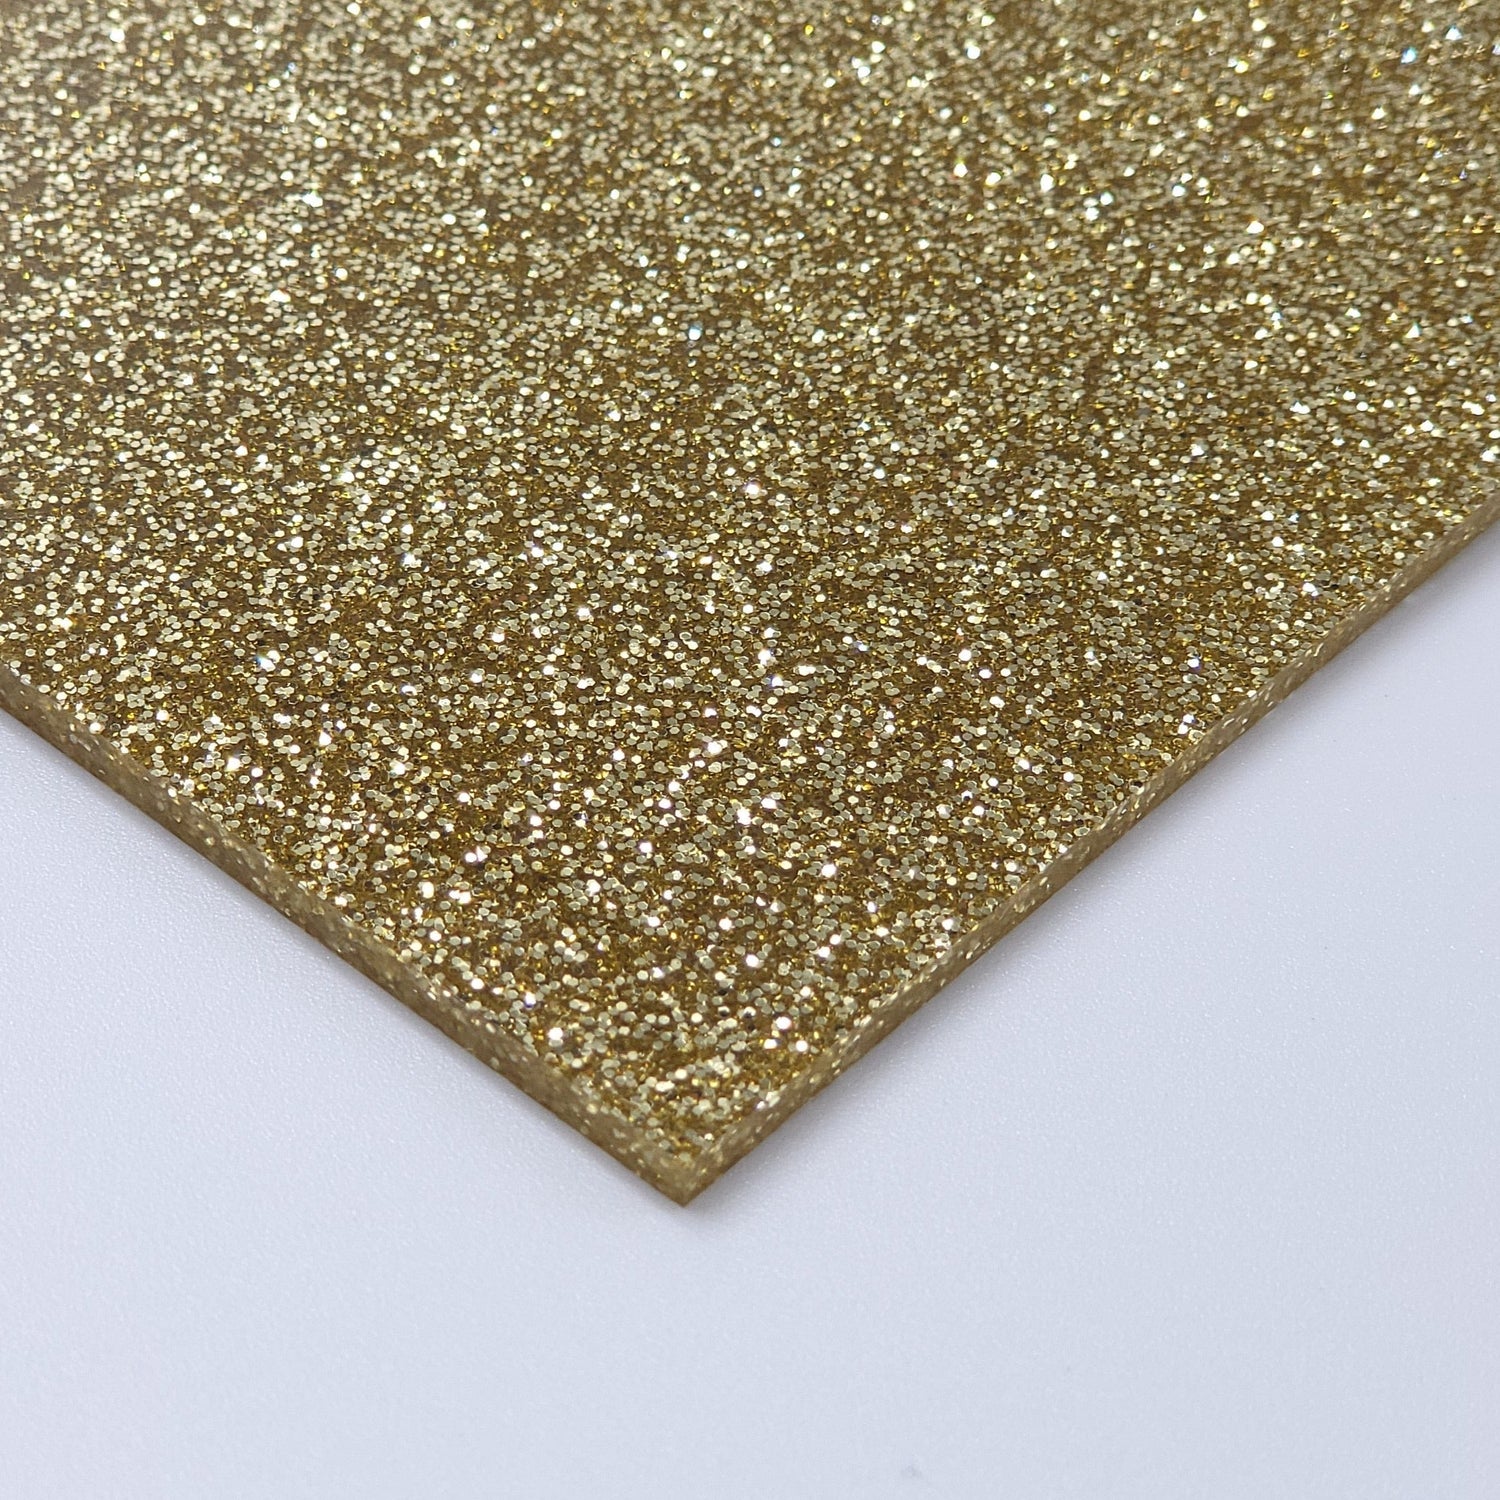 1/8” Gold - Glitter  cast acrylic sheets